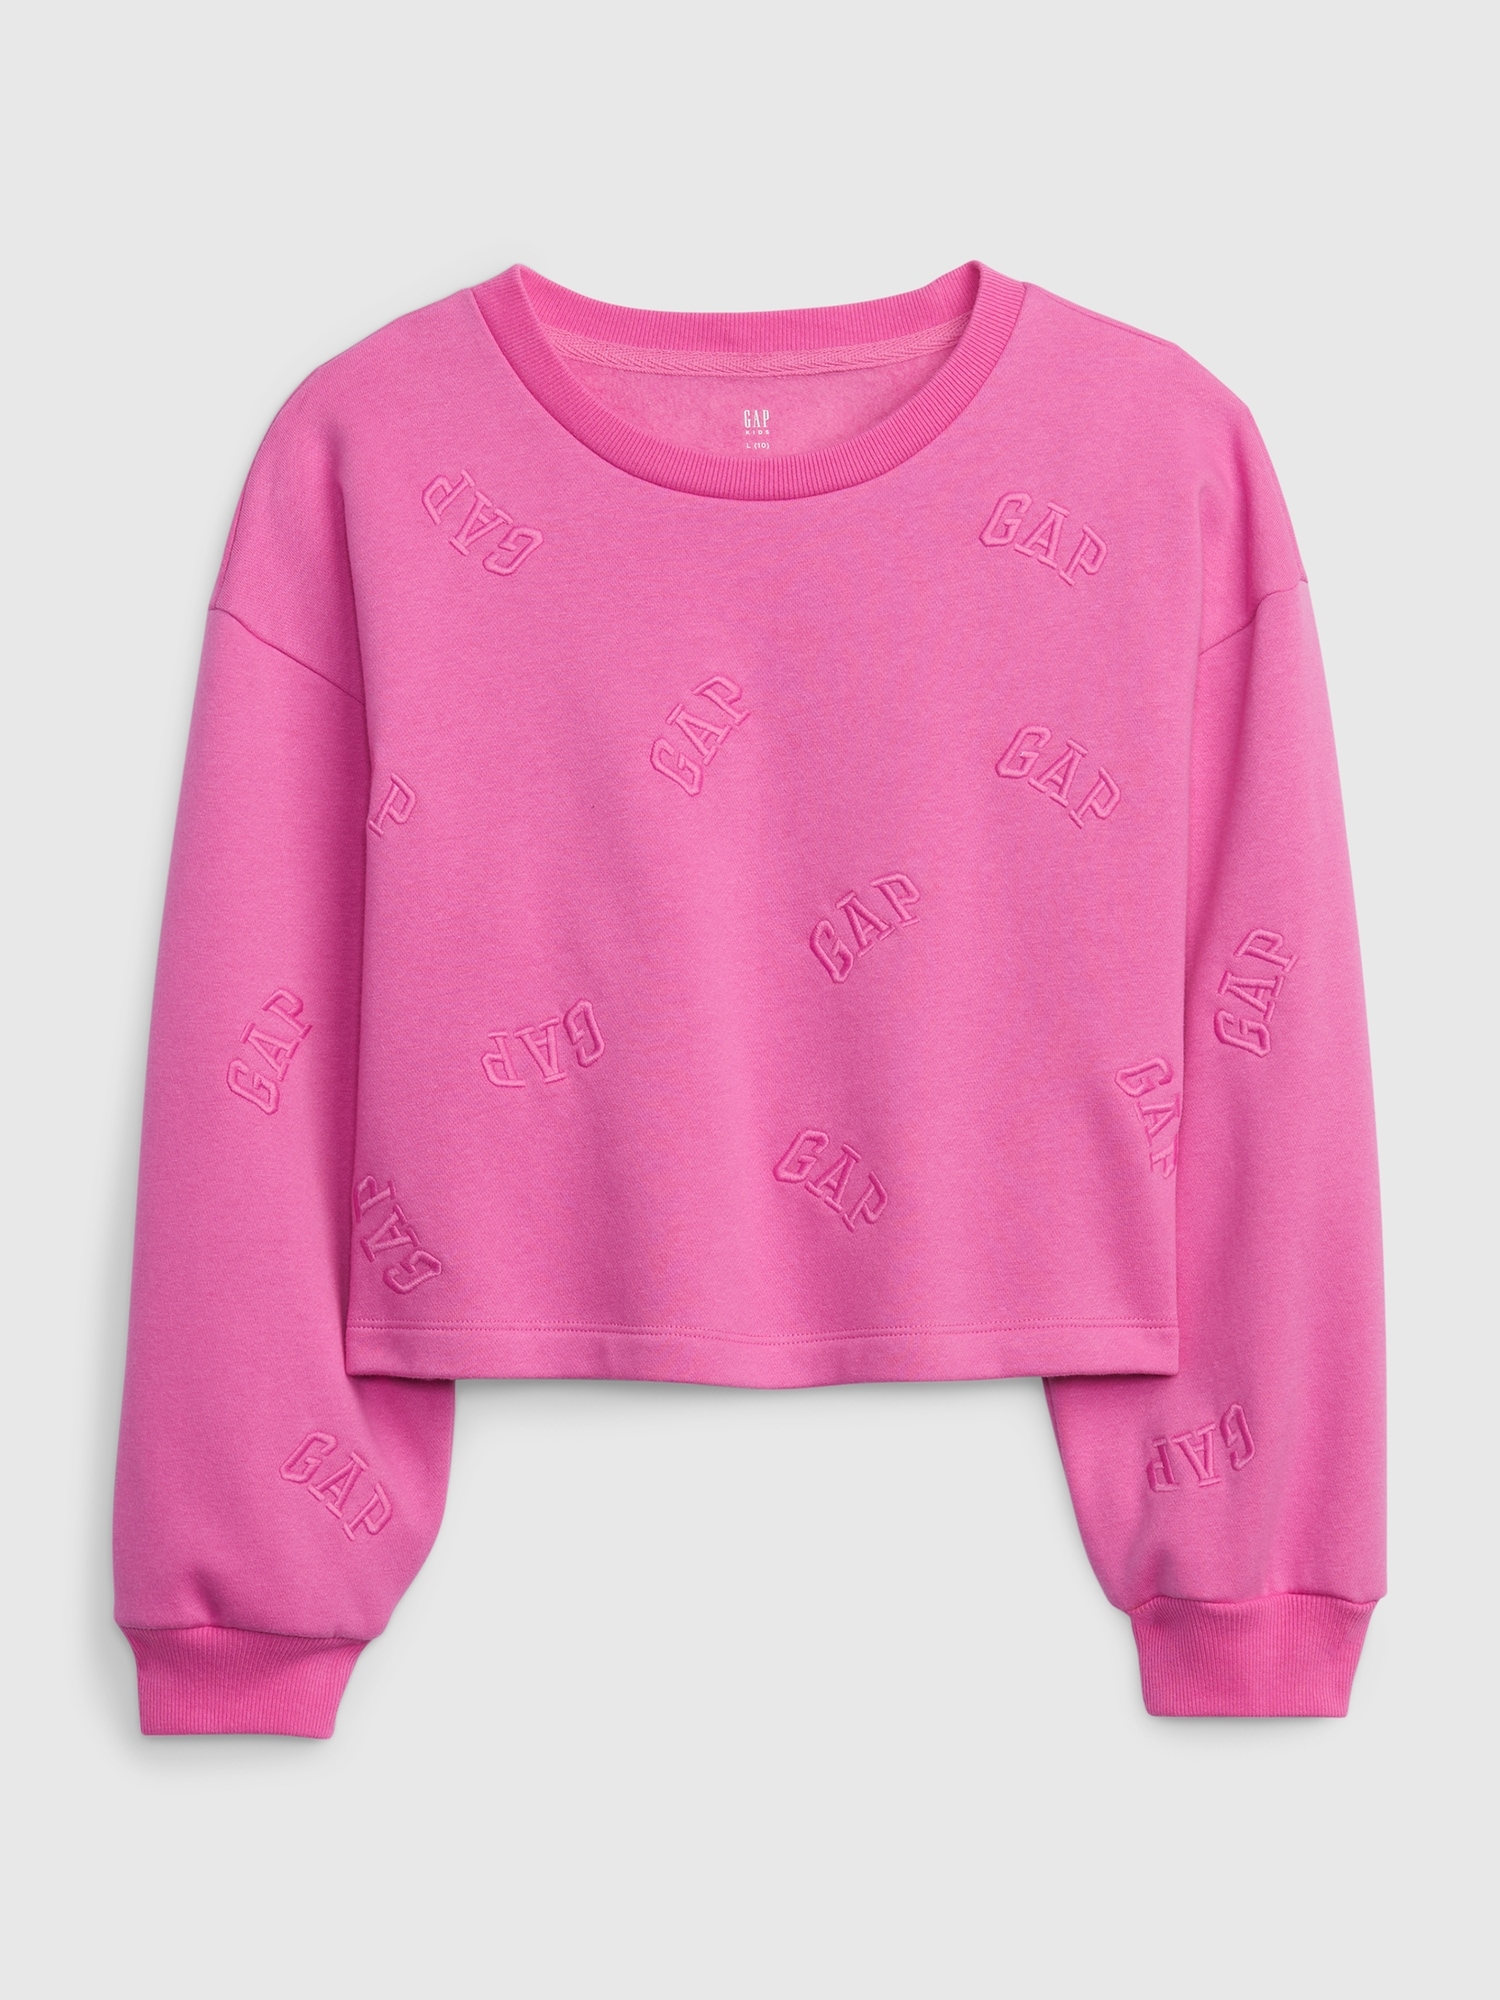 GAP Kids Sweatshirt With Logo - Girls